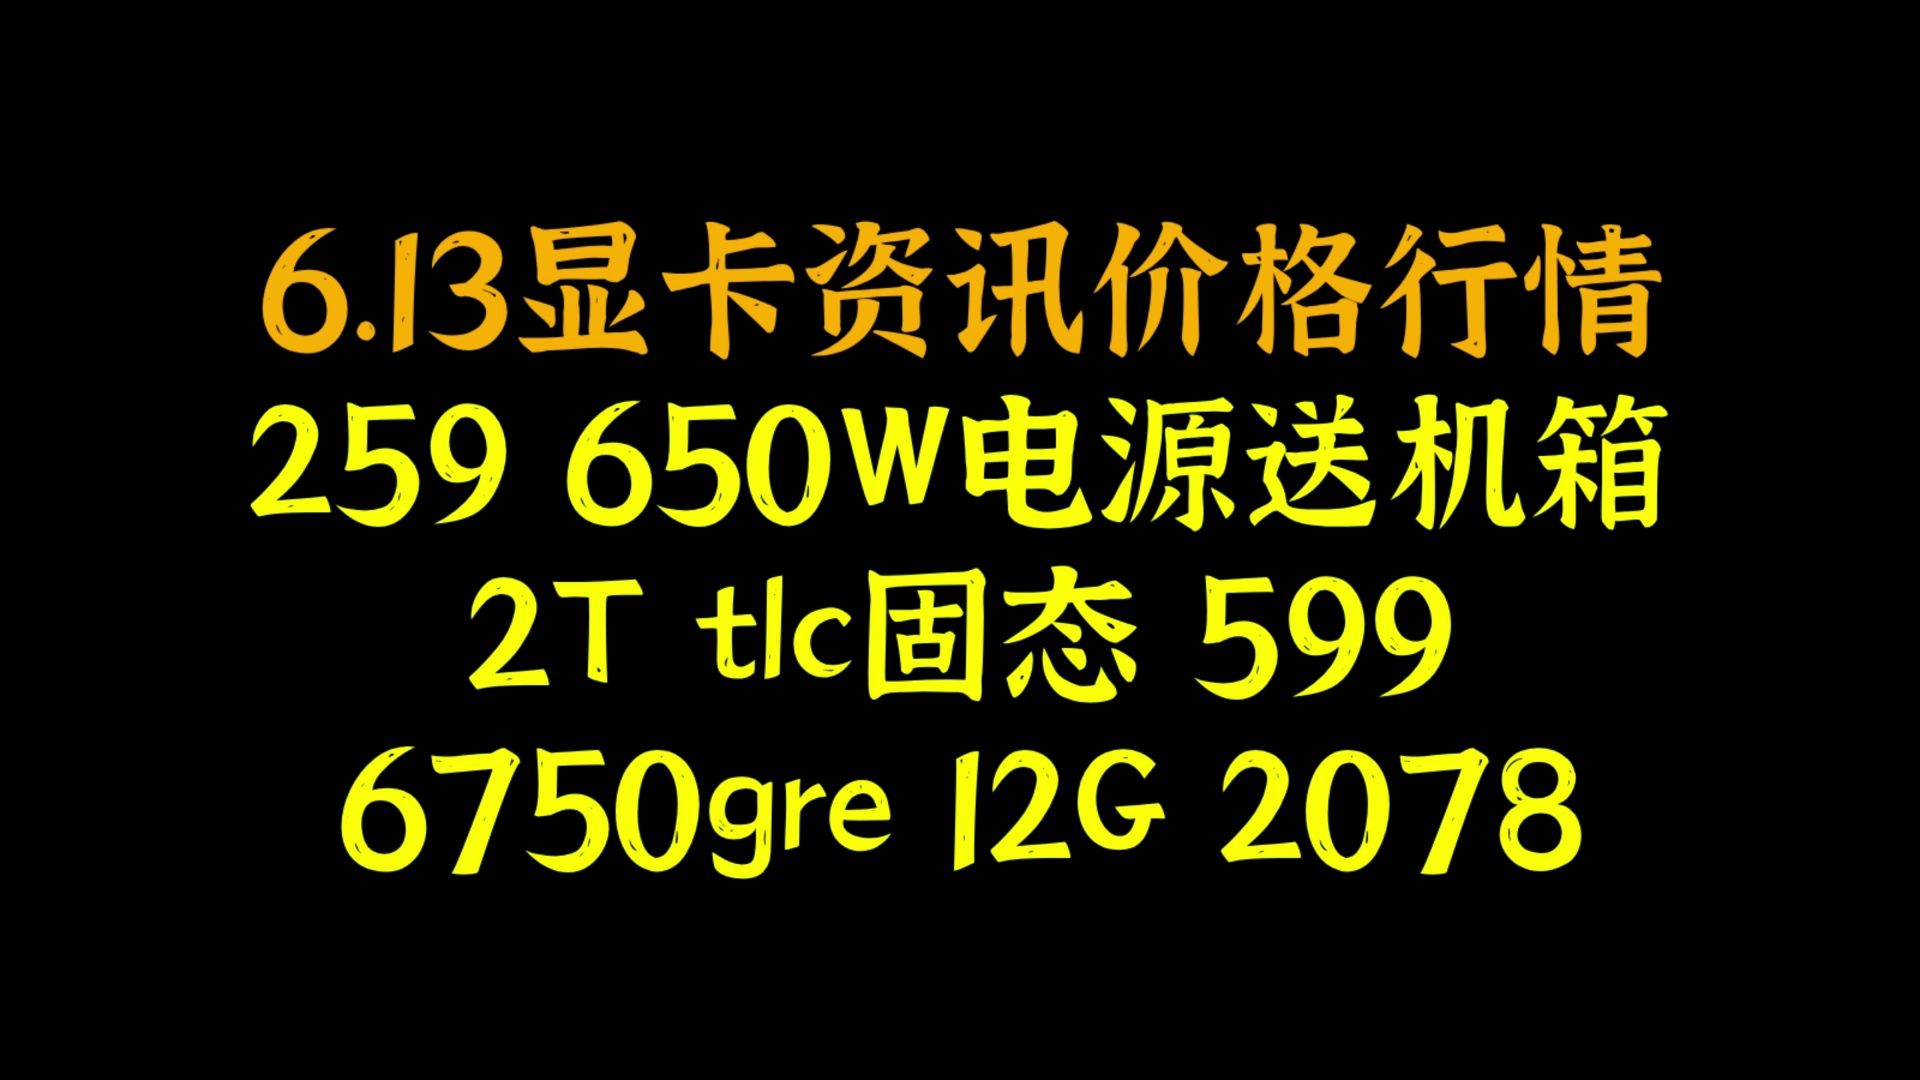 259 650W电源送机箱，2T tlc固态 599，6750gre 12G 2078，6.13显卡资讯价格行情